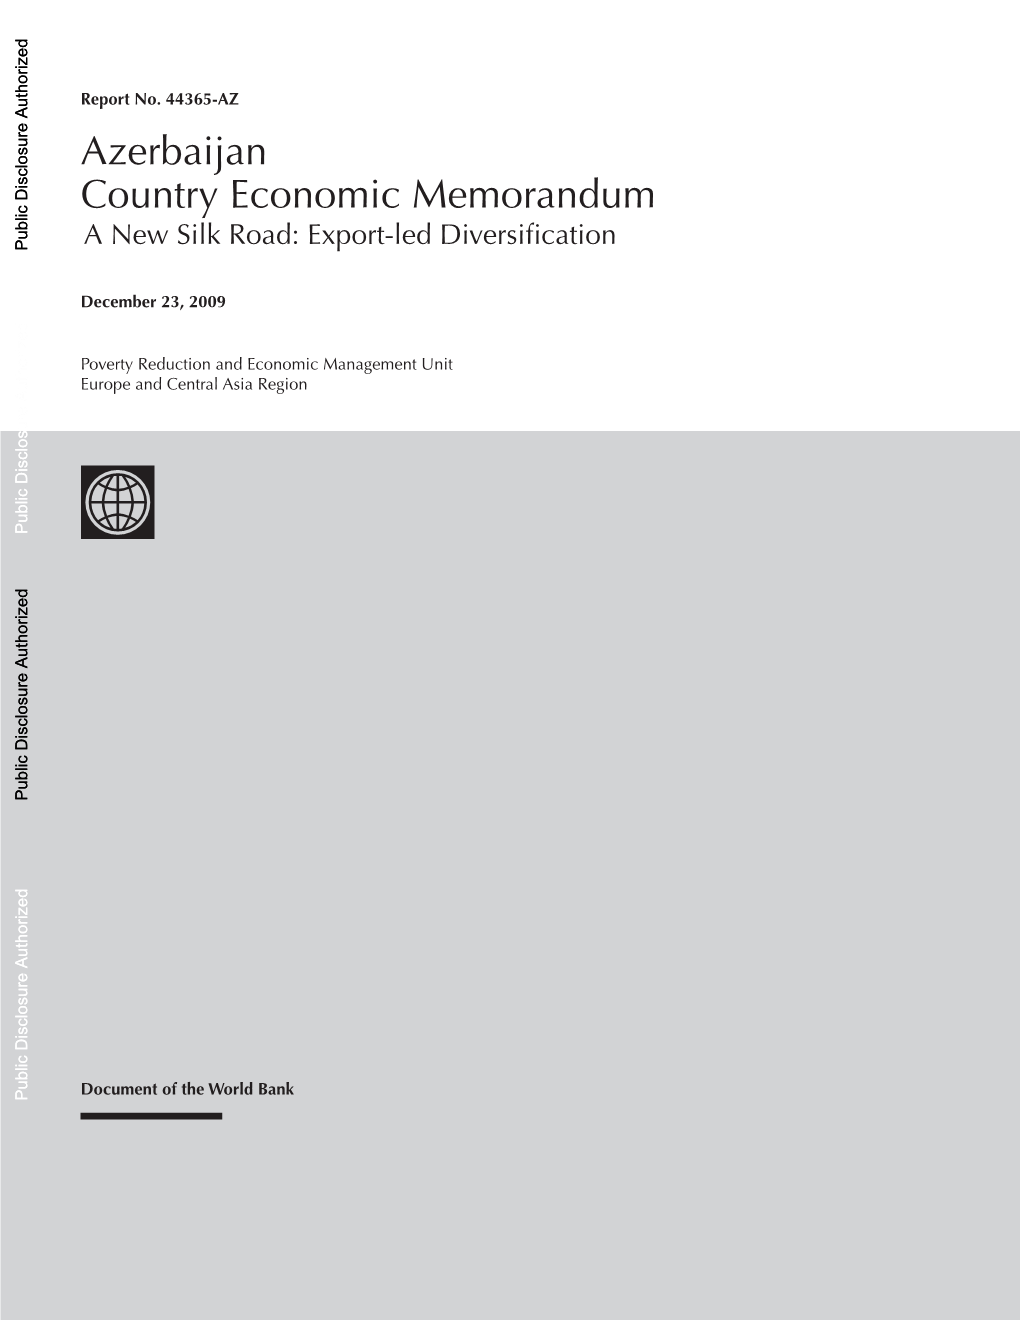 Azerbaijan Country Economic Memorandum